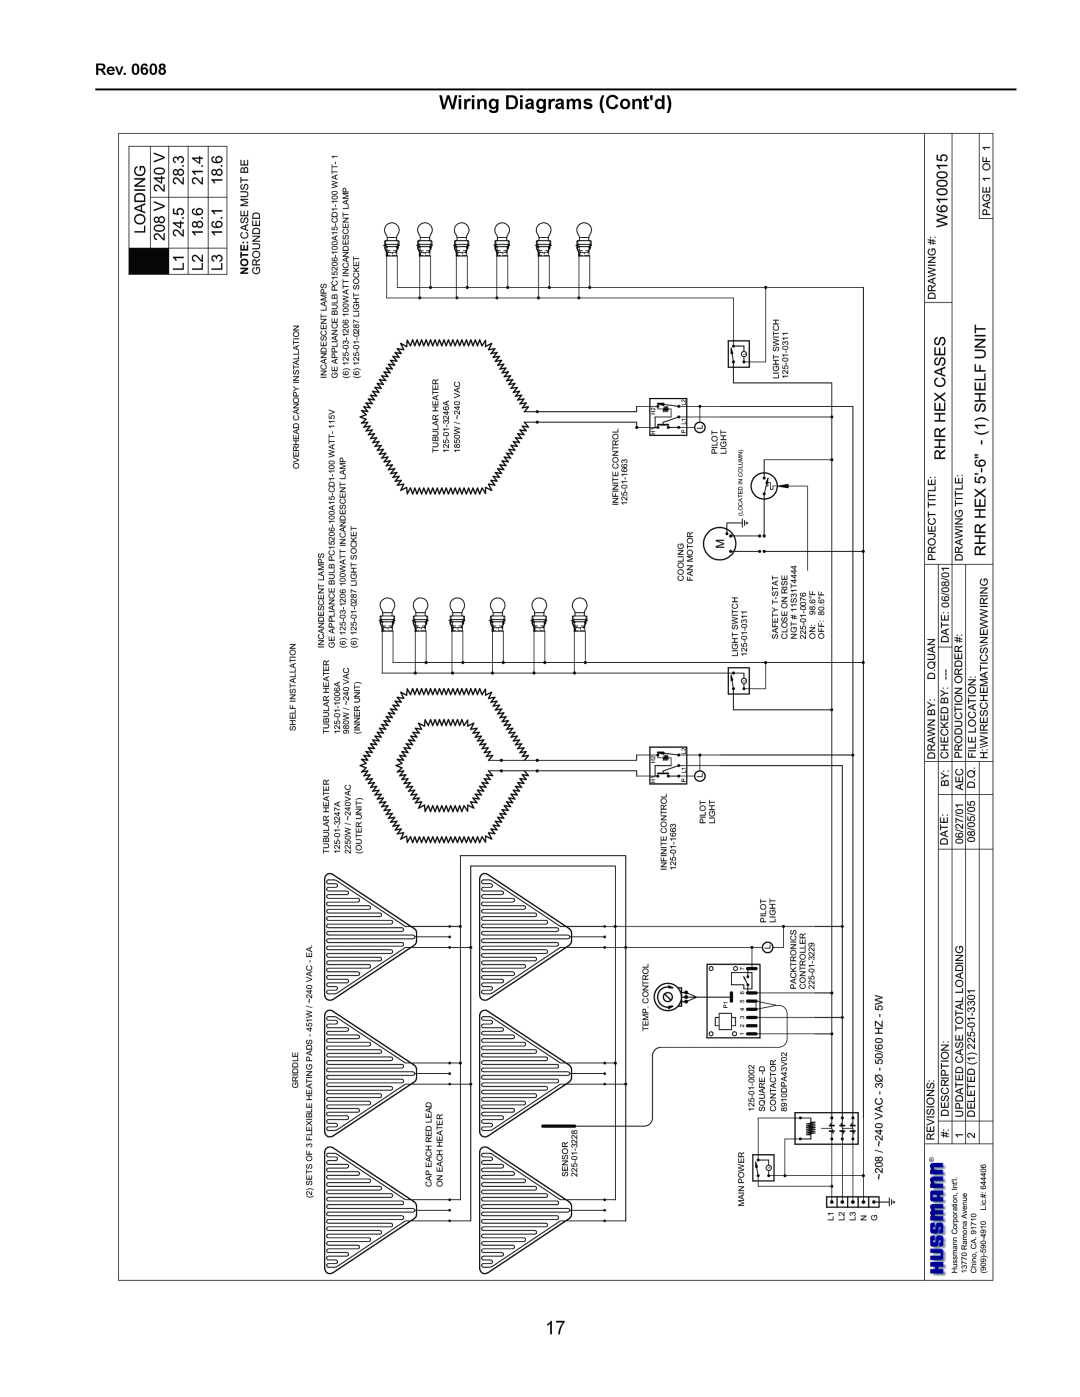 hussman RHR-SQ, rhr-hex, RHR2-HEX Wiring Diagrams Contd, LOADING 208 V 240 L1 24.5 L2 18.6 L3, Rev, Rhr Hex Cases, W6100015 